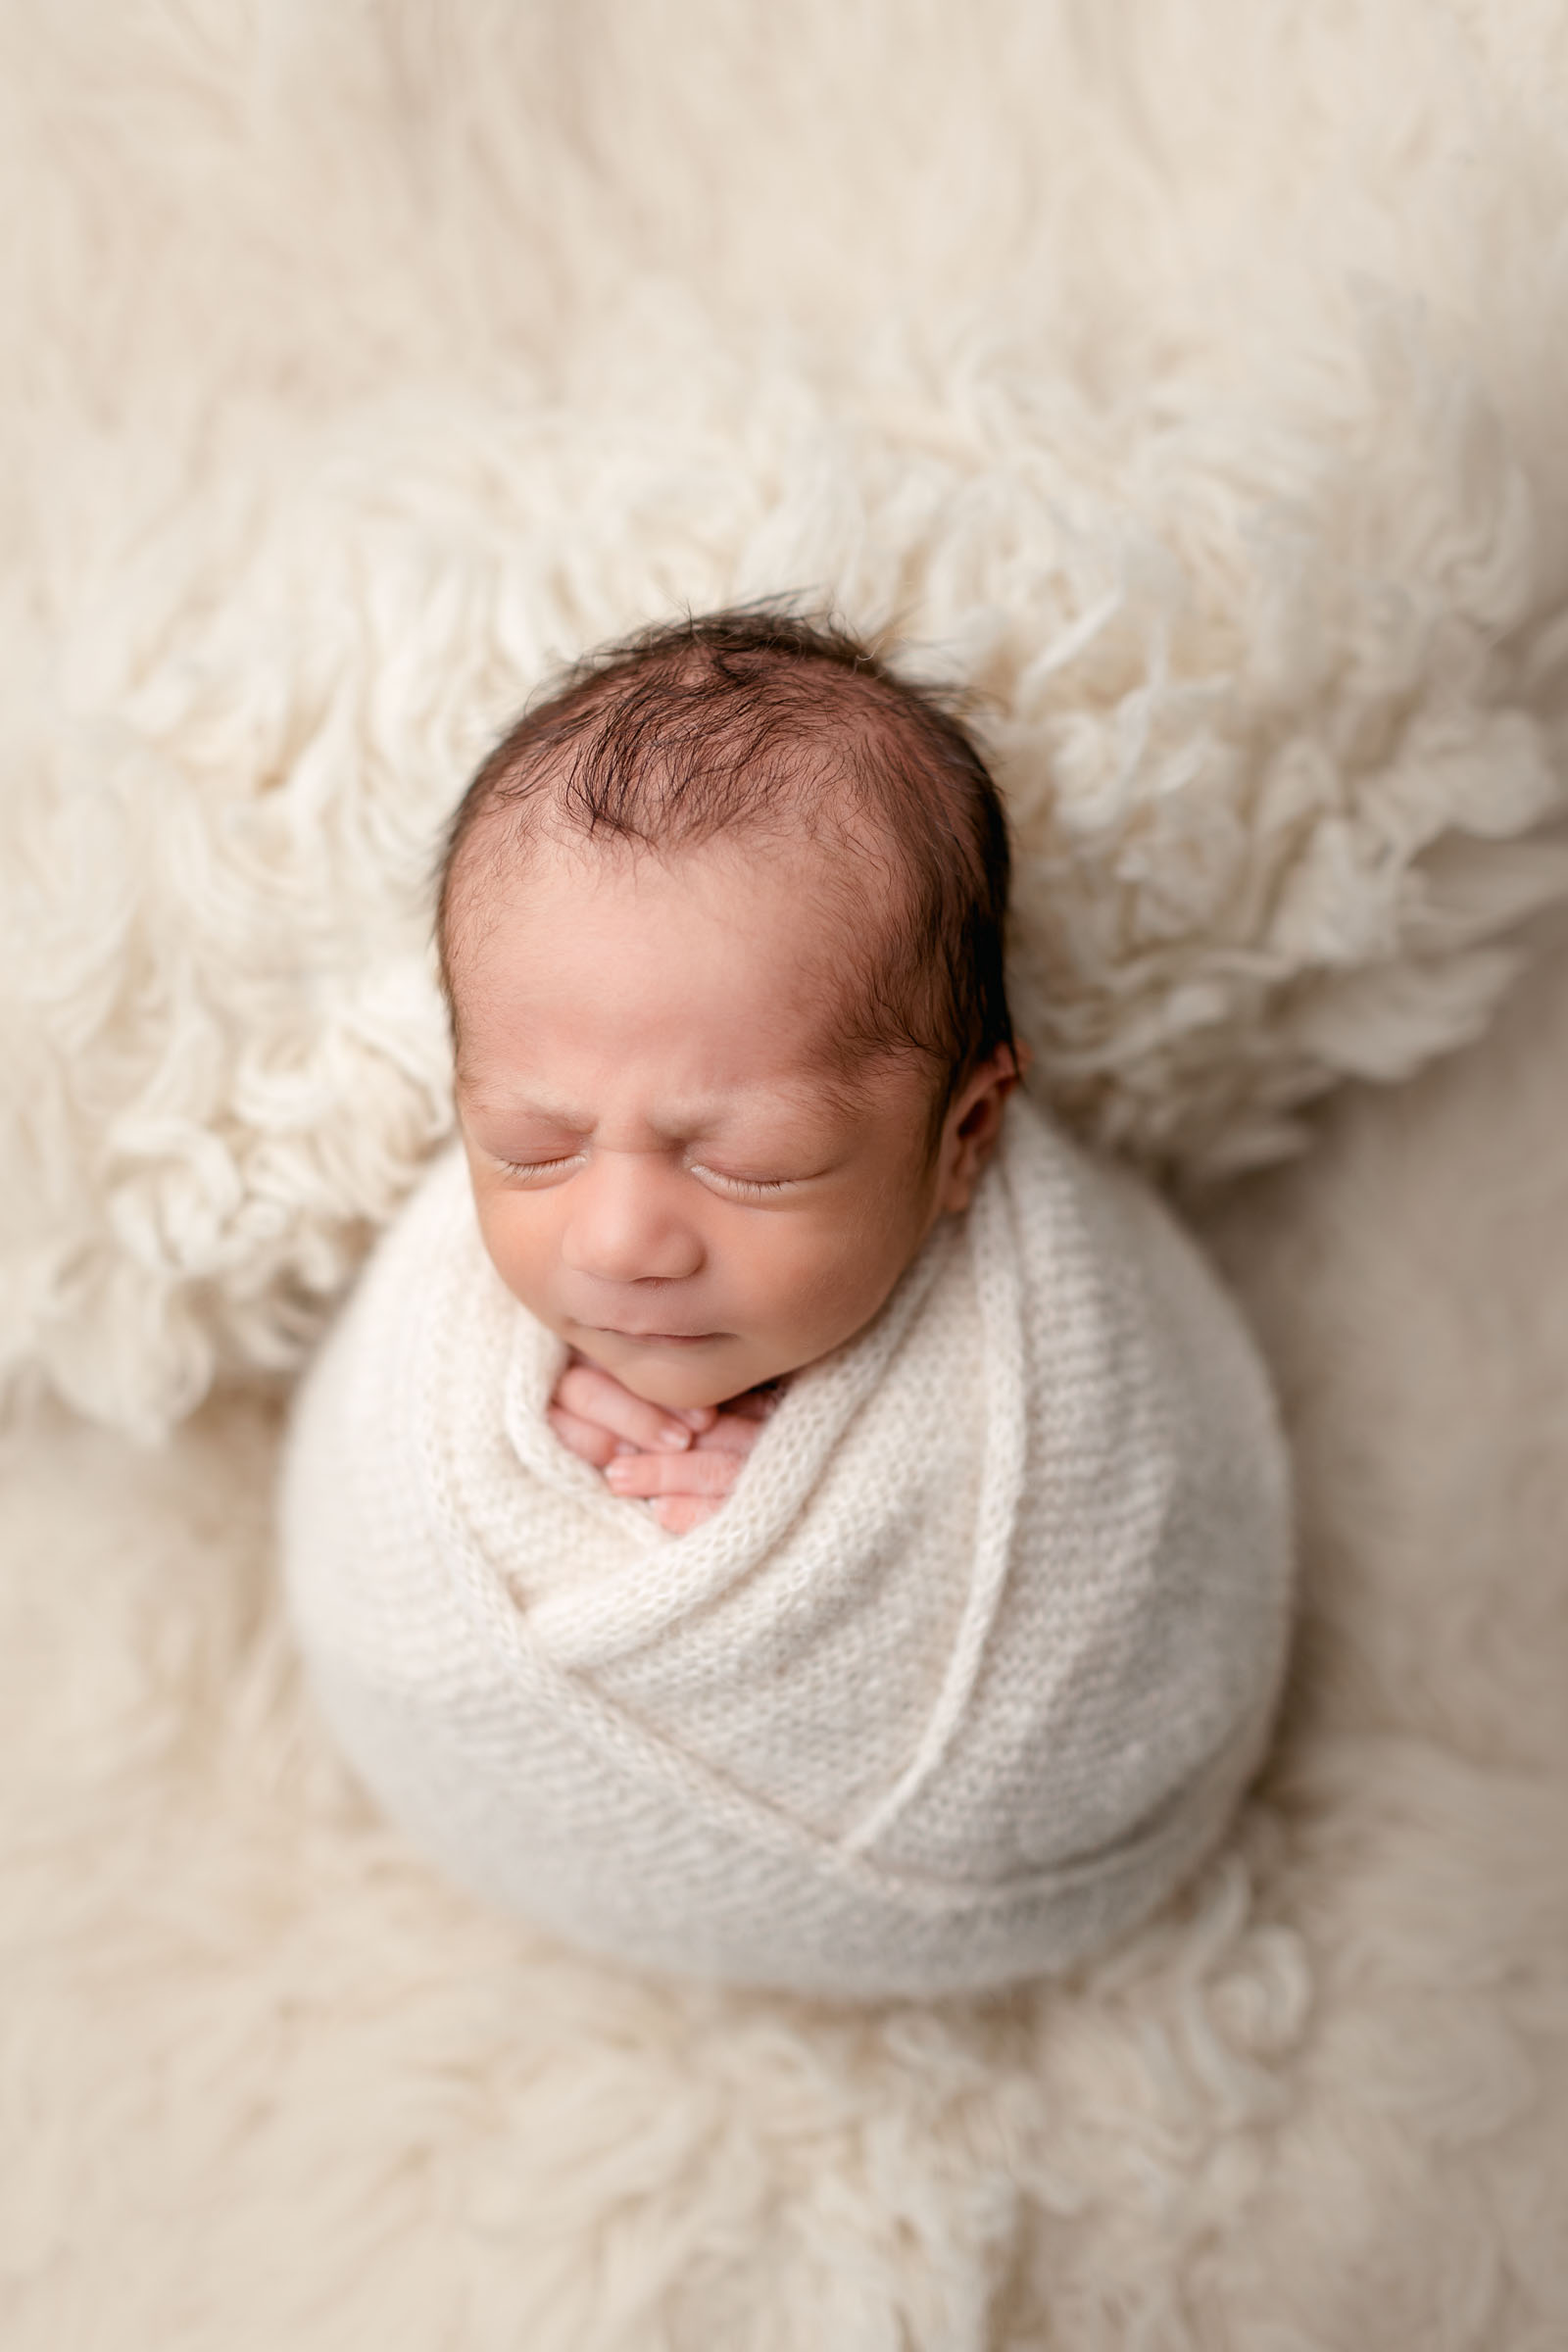 Studio Newborn Portrait by San Diego Newborn Photographer featuring a sleeping baby wrapped up on a fur rug